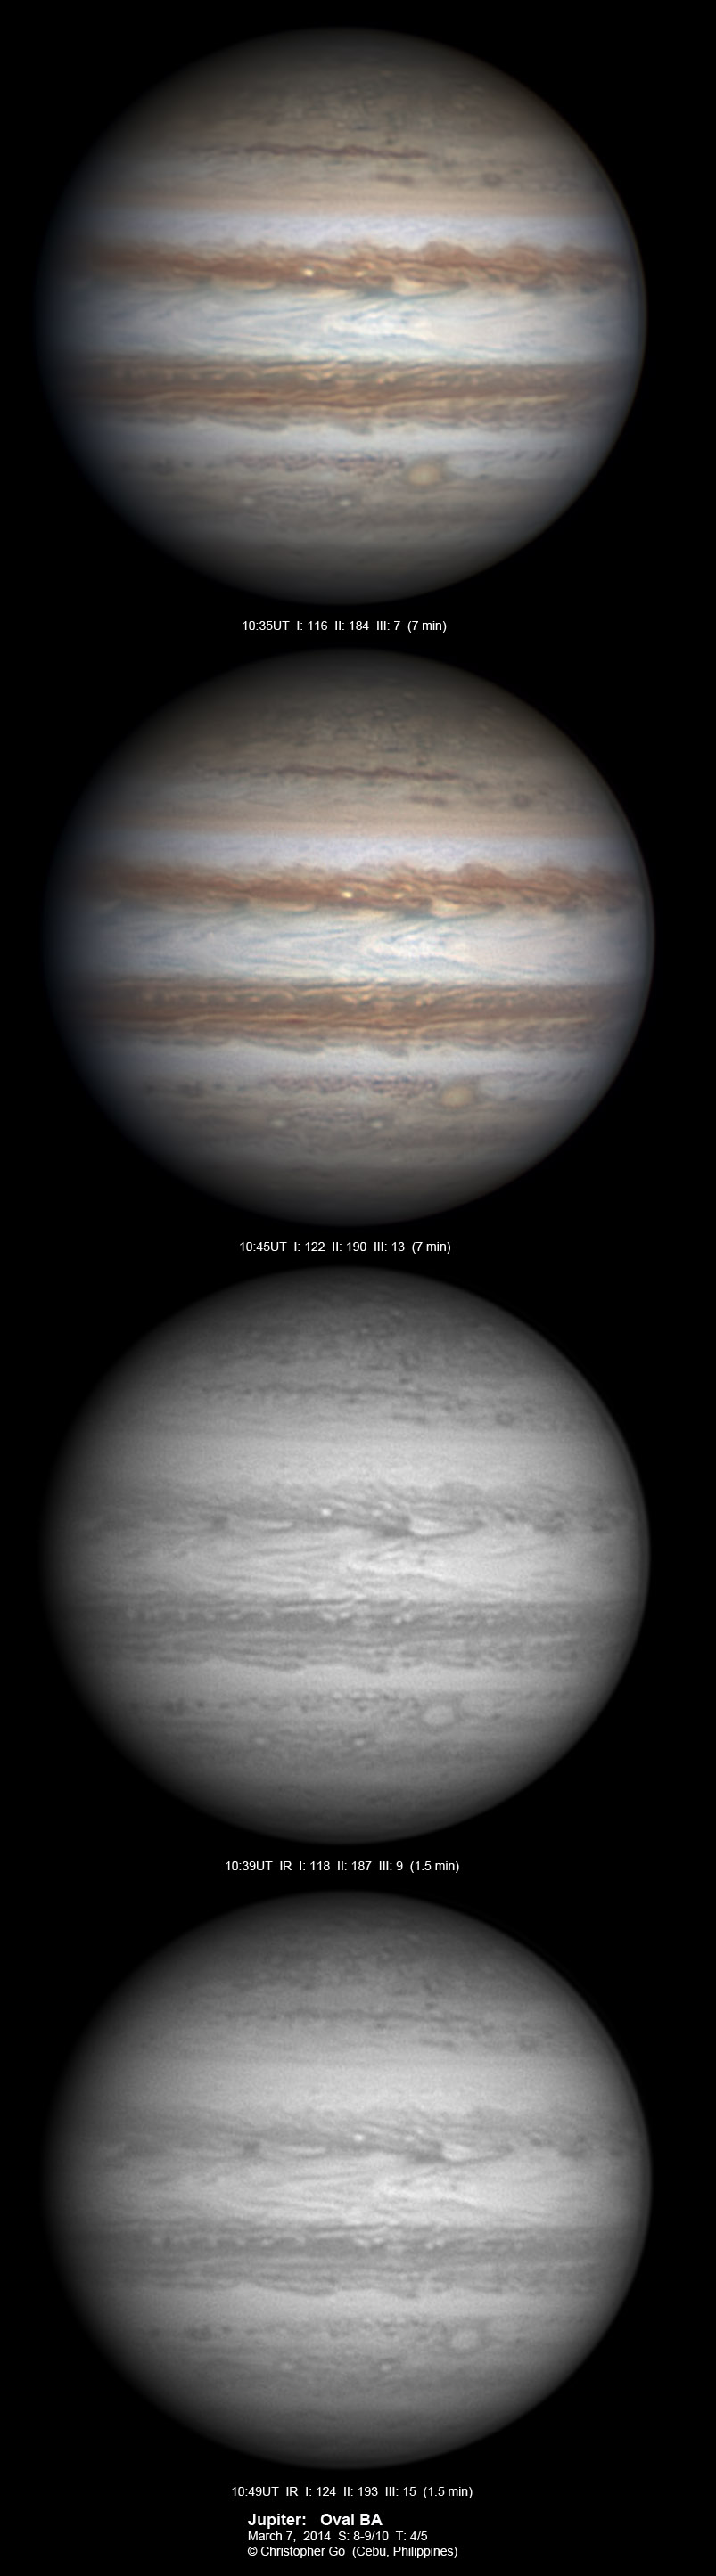 Jupiter 2013-14 by Chris Go